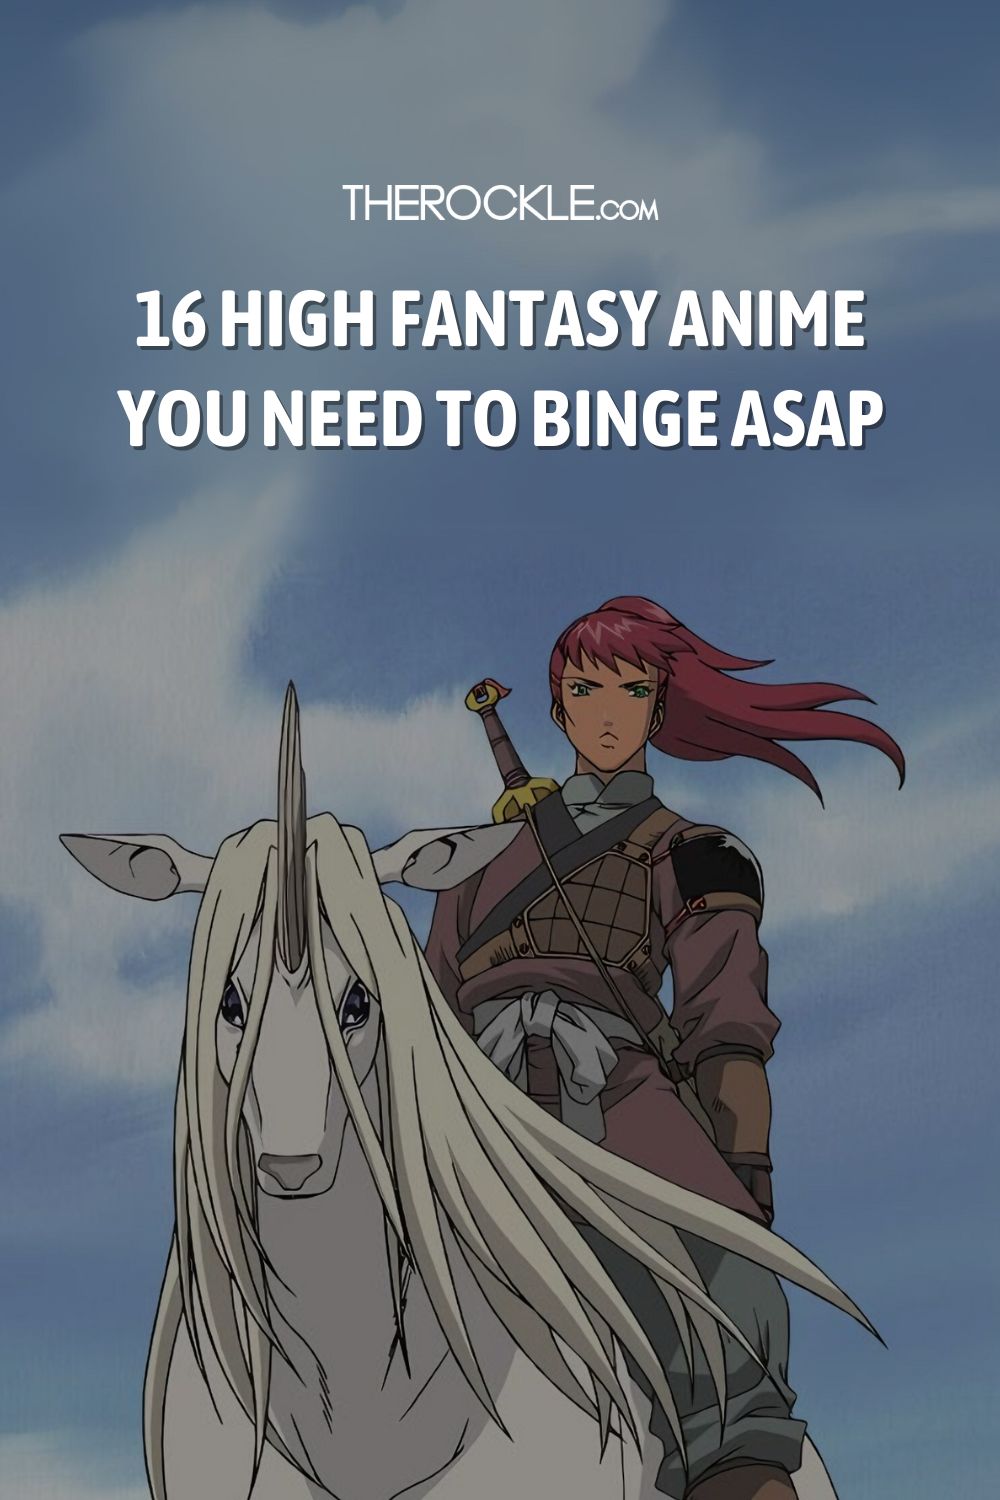 16 High Fantasy Anime You Need to Binge ASAP Pinterest